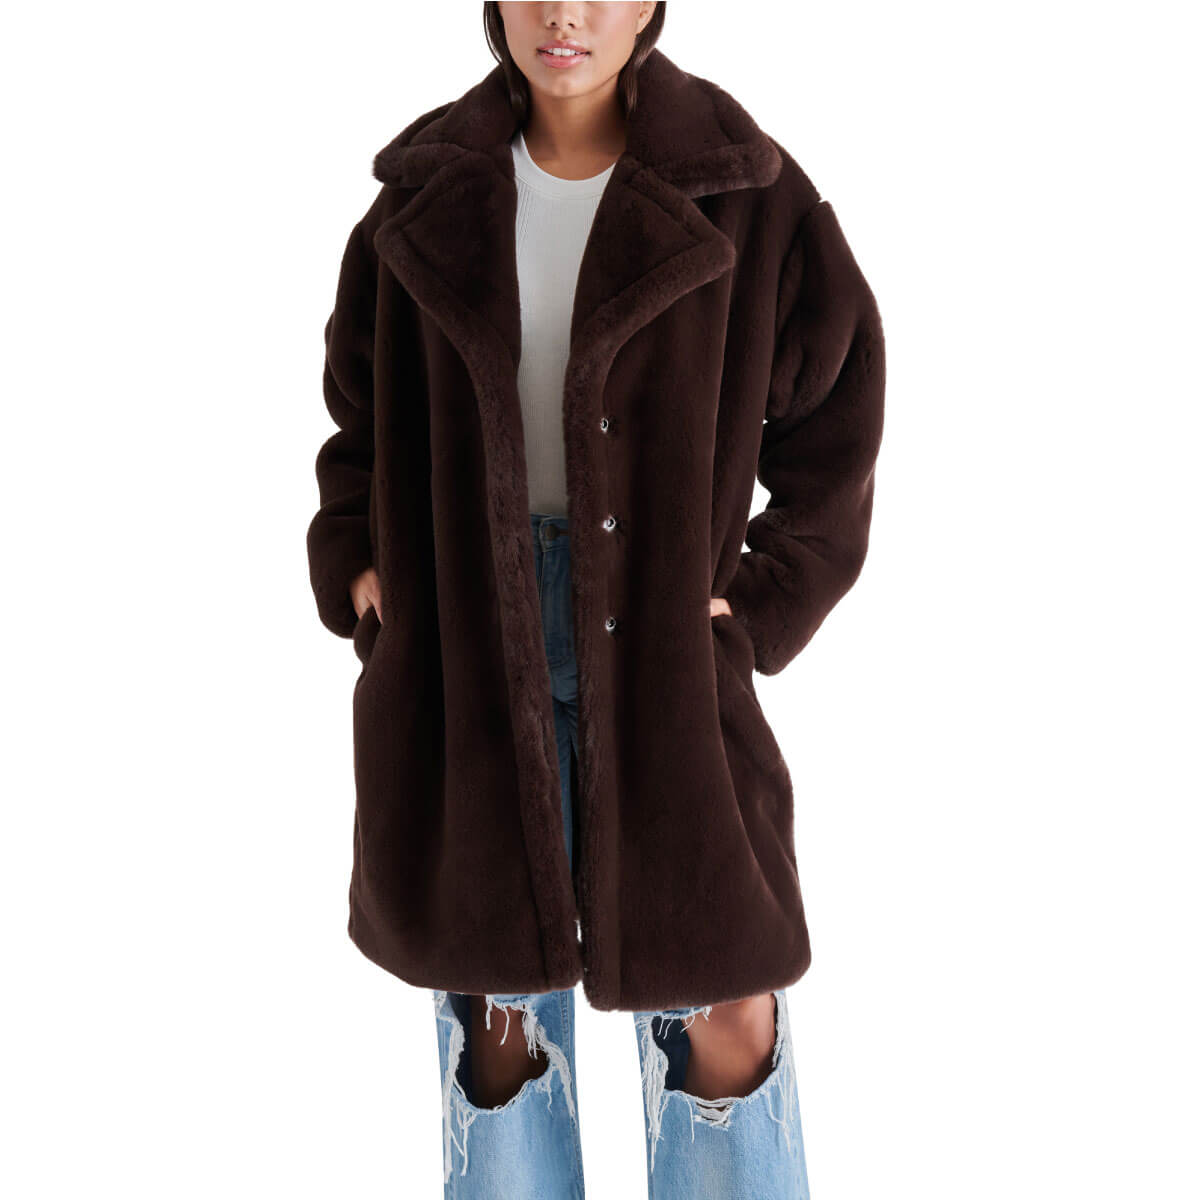 Steve Madden Emery Faux Fur Coat dark brown front | MILK MONEY milkmoney.co | cute jackets for women. cute coats. cool jackets for women. stylish jackets for women. trendy jackets for women. trendy womens coats.